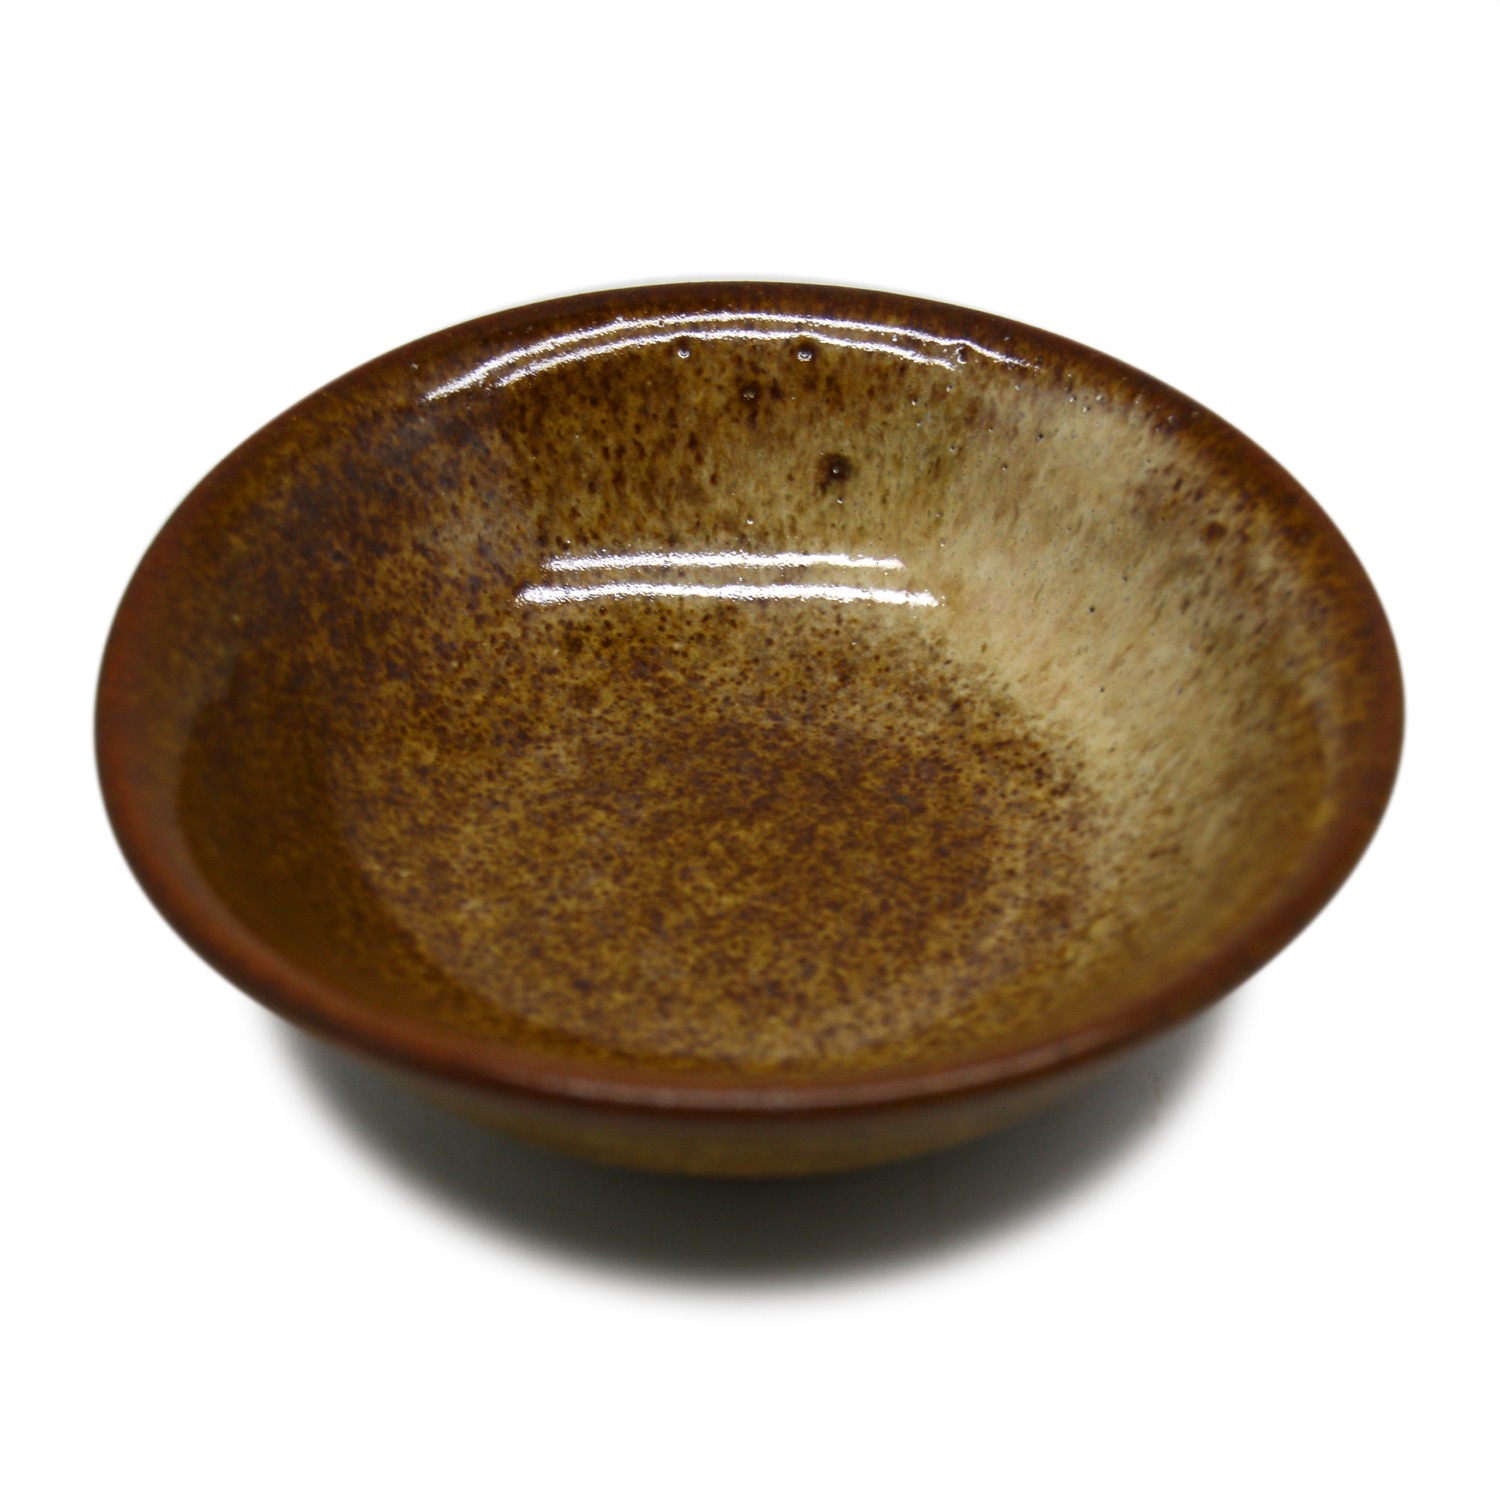 Salt bowl S1